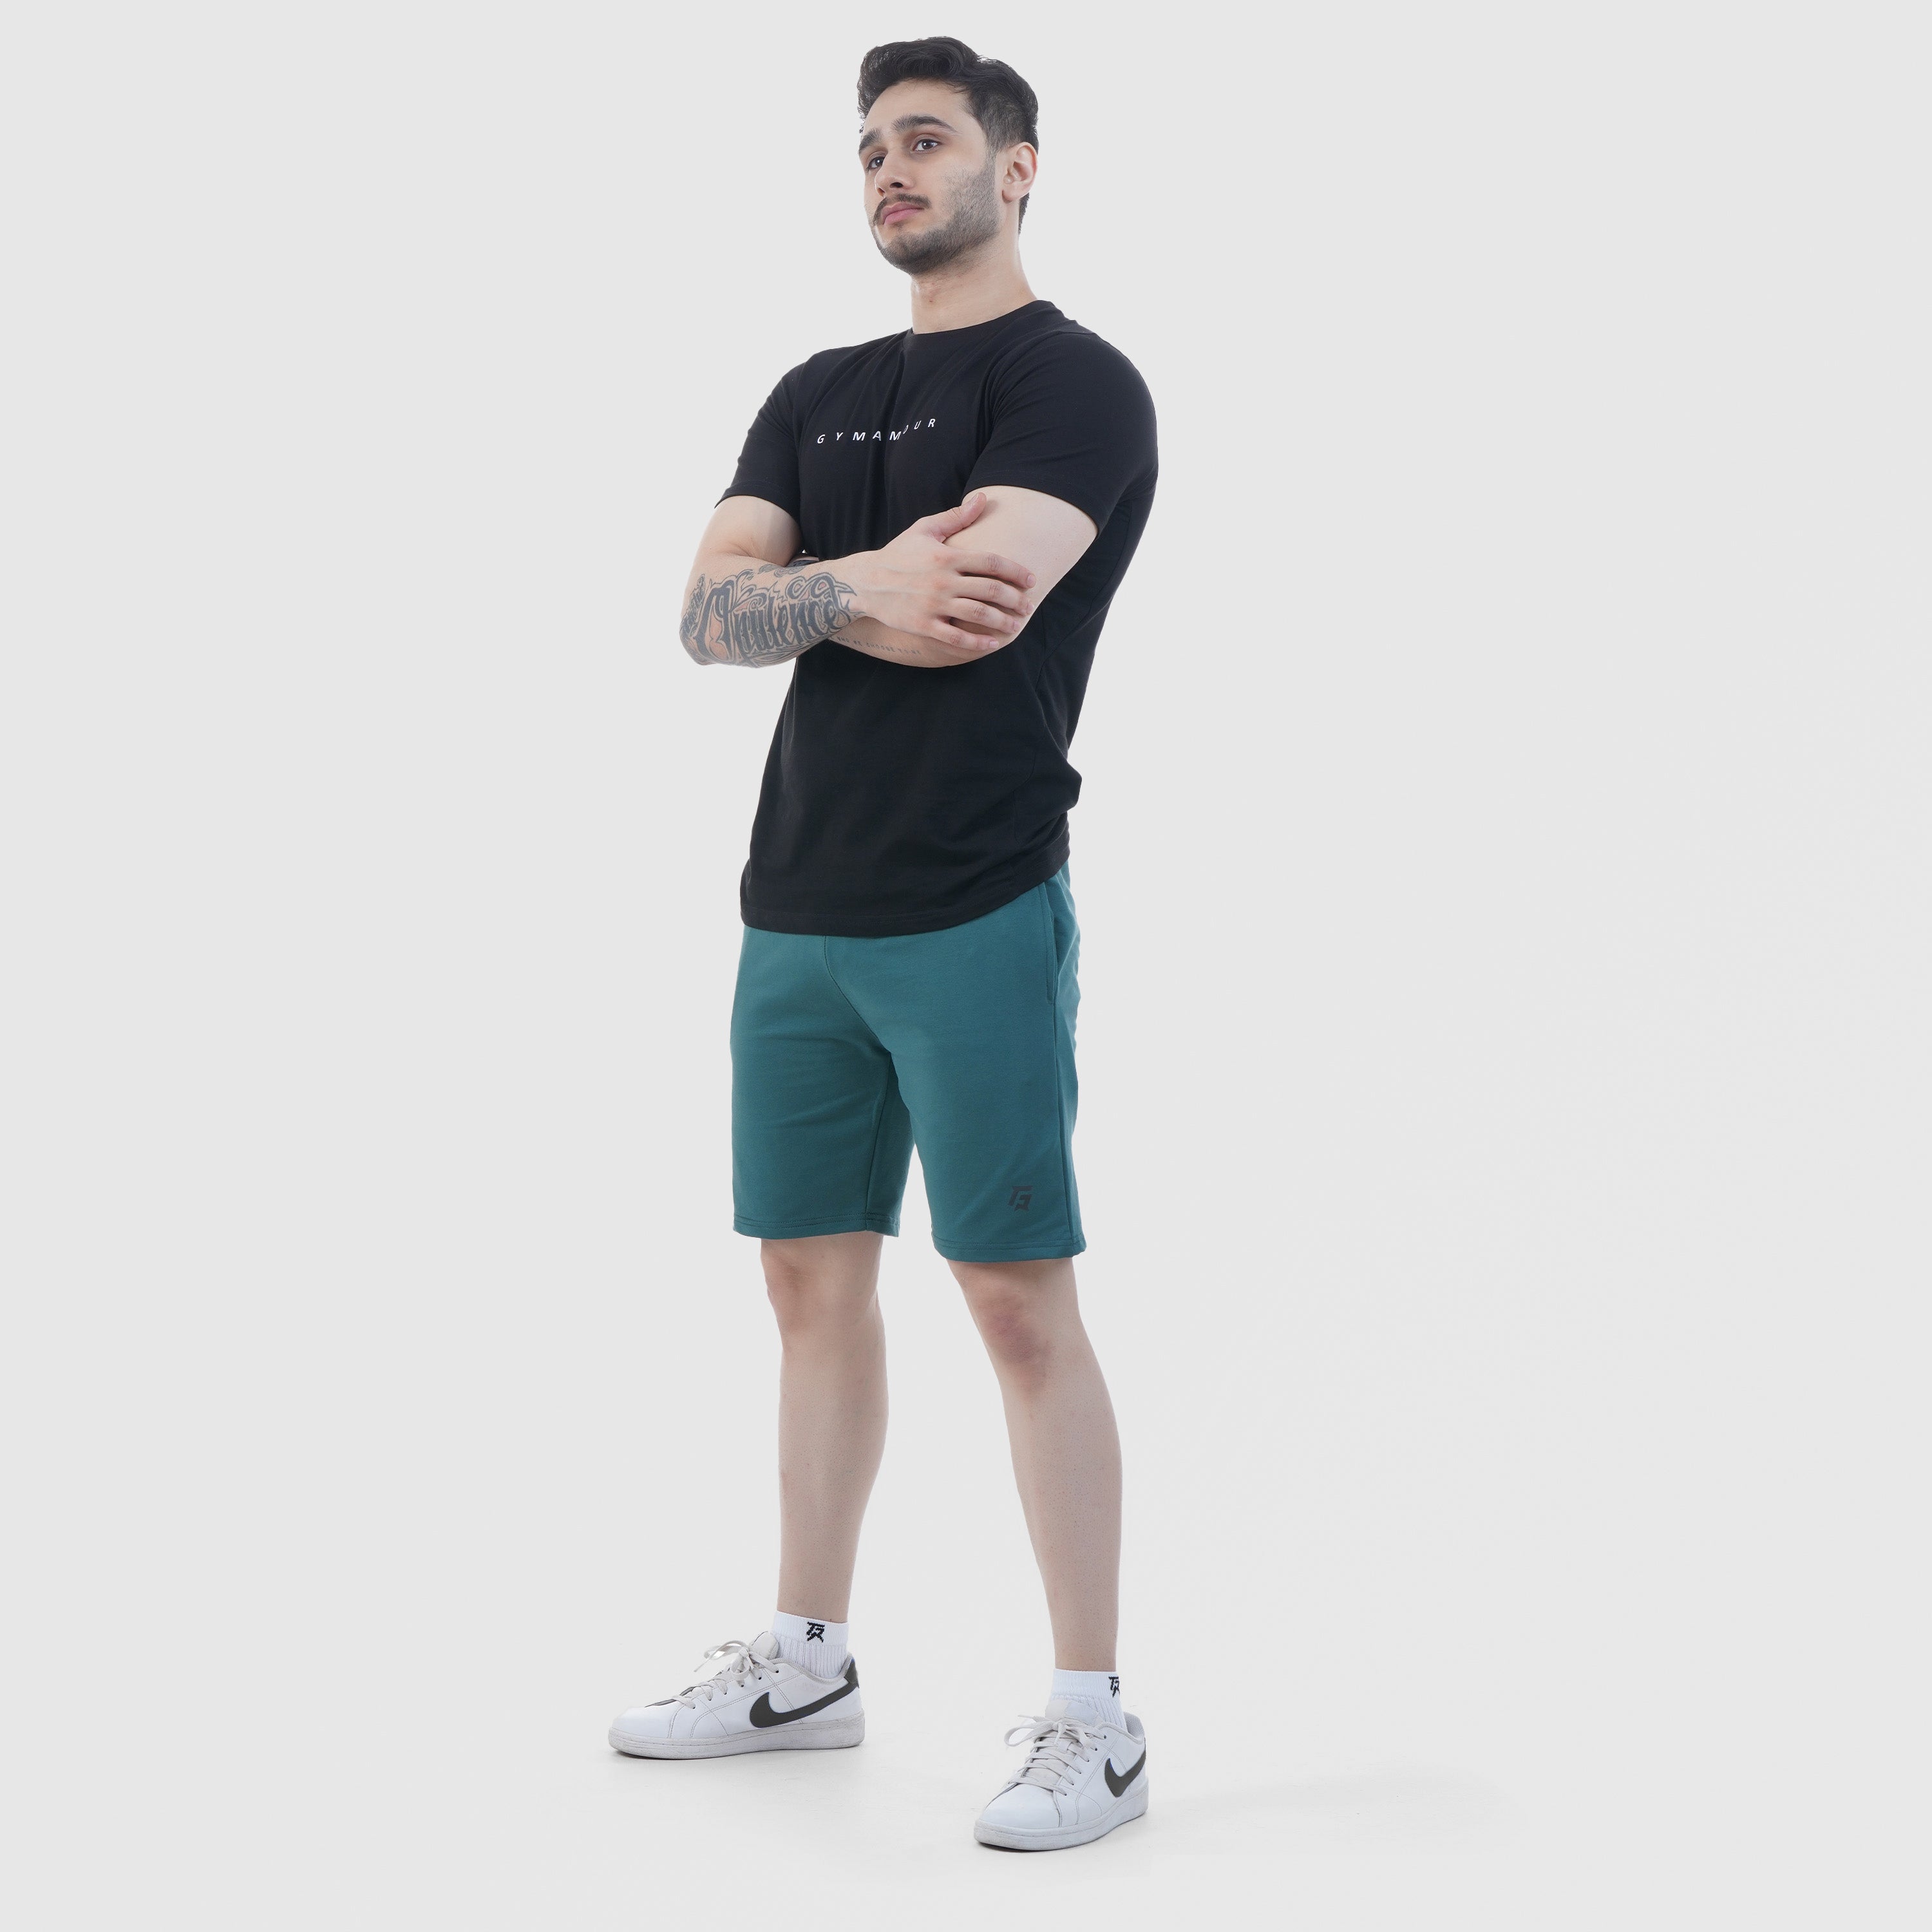 QuickMove Shorts (Green)